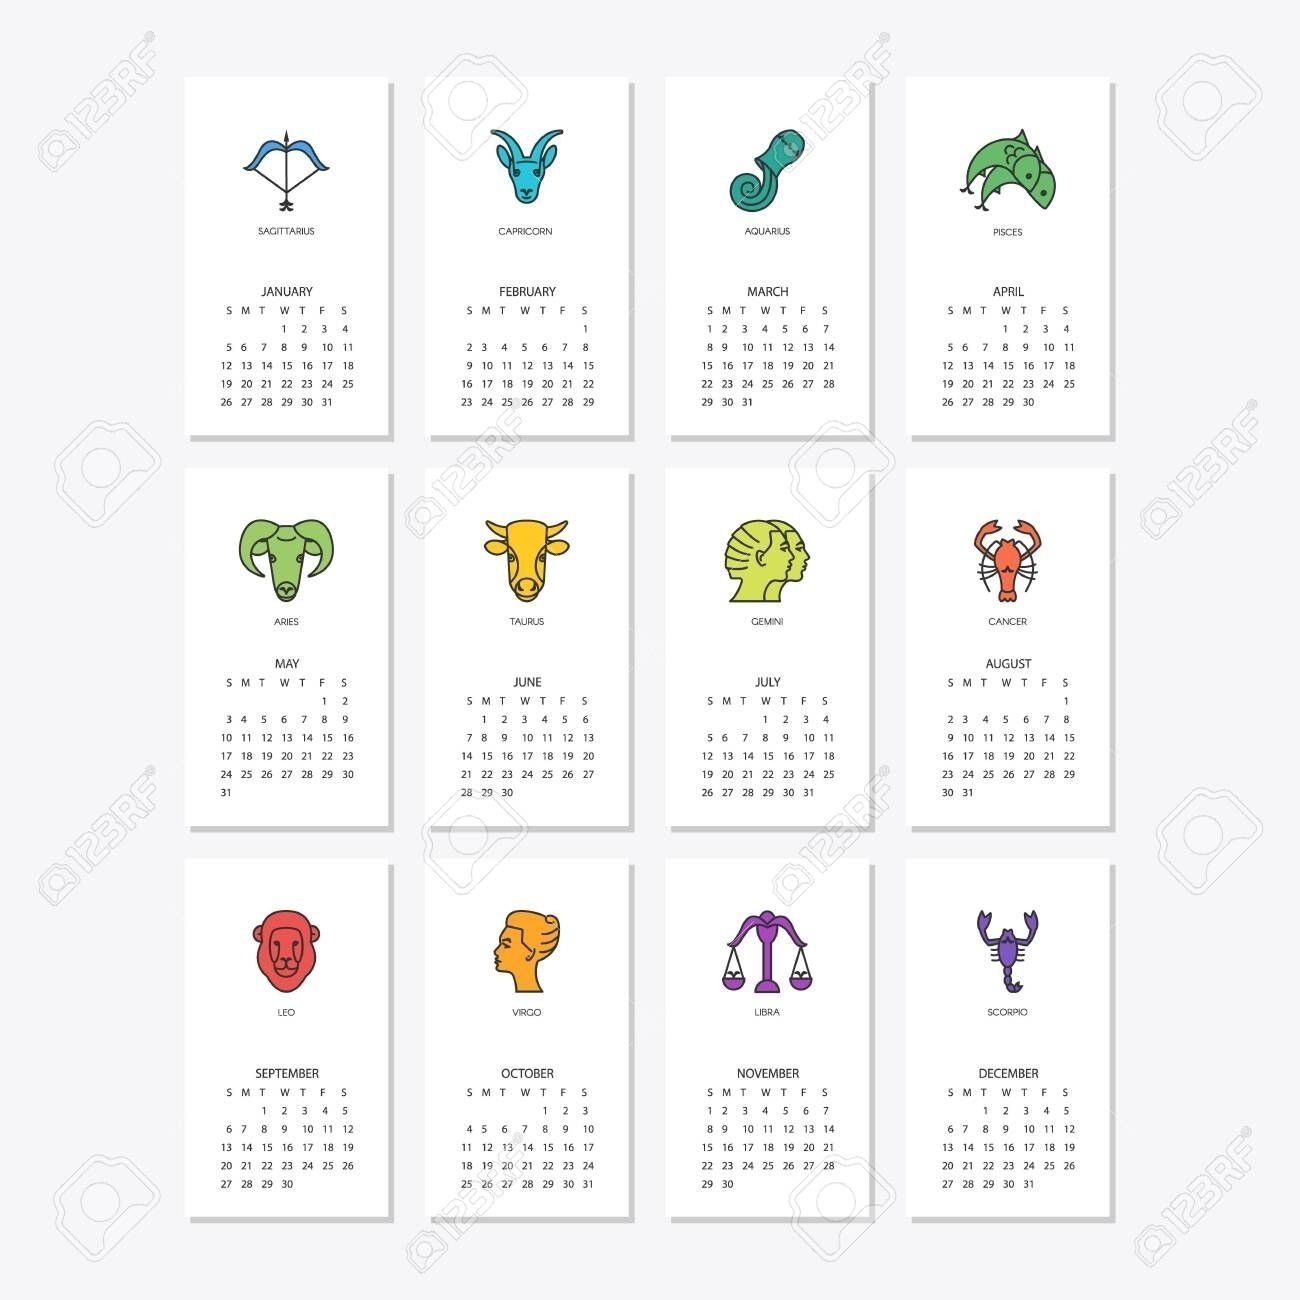 Zodiac Calendar Dates And Signs | Zodiac Signs Calendar New Calendar For Zodiac Signs